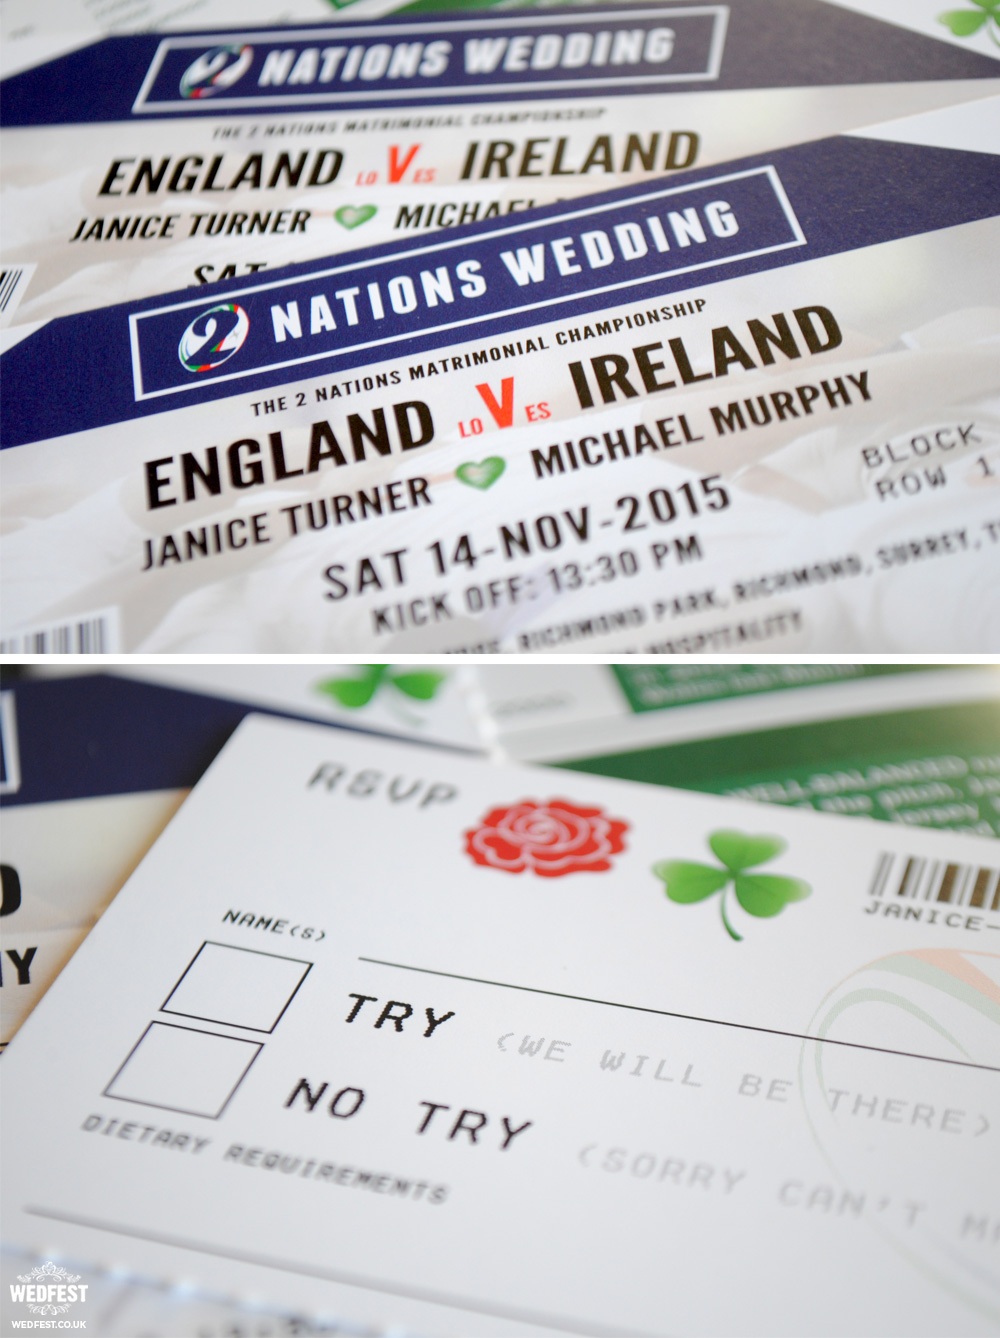 England Ireland rugby wedding invites